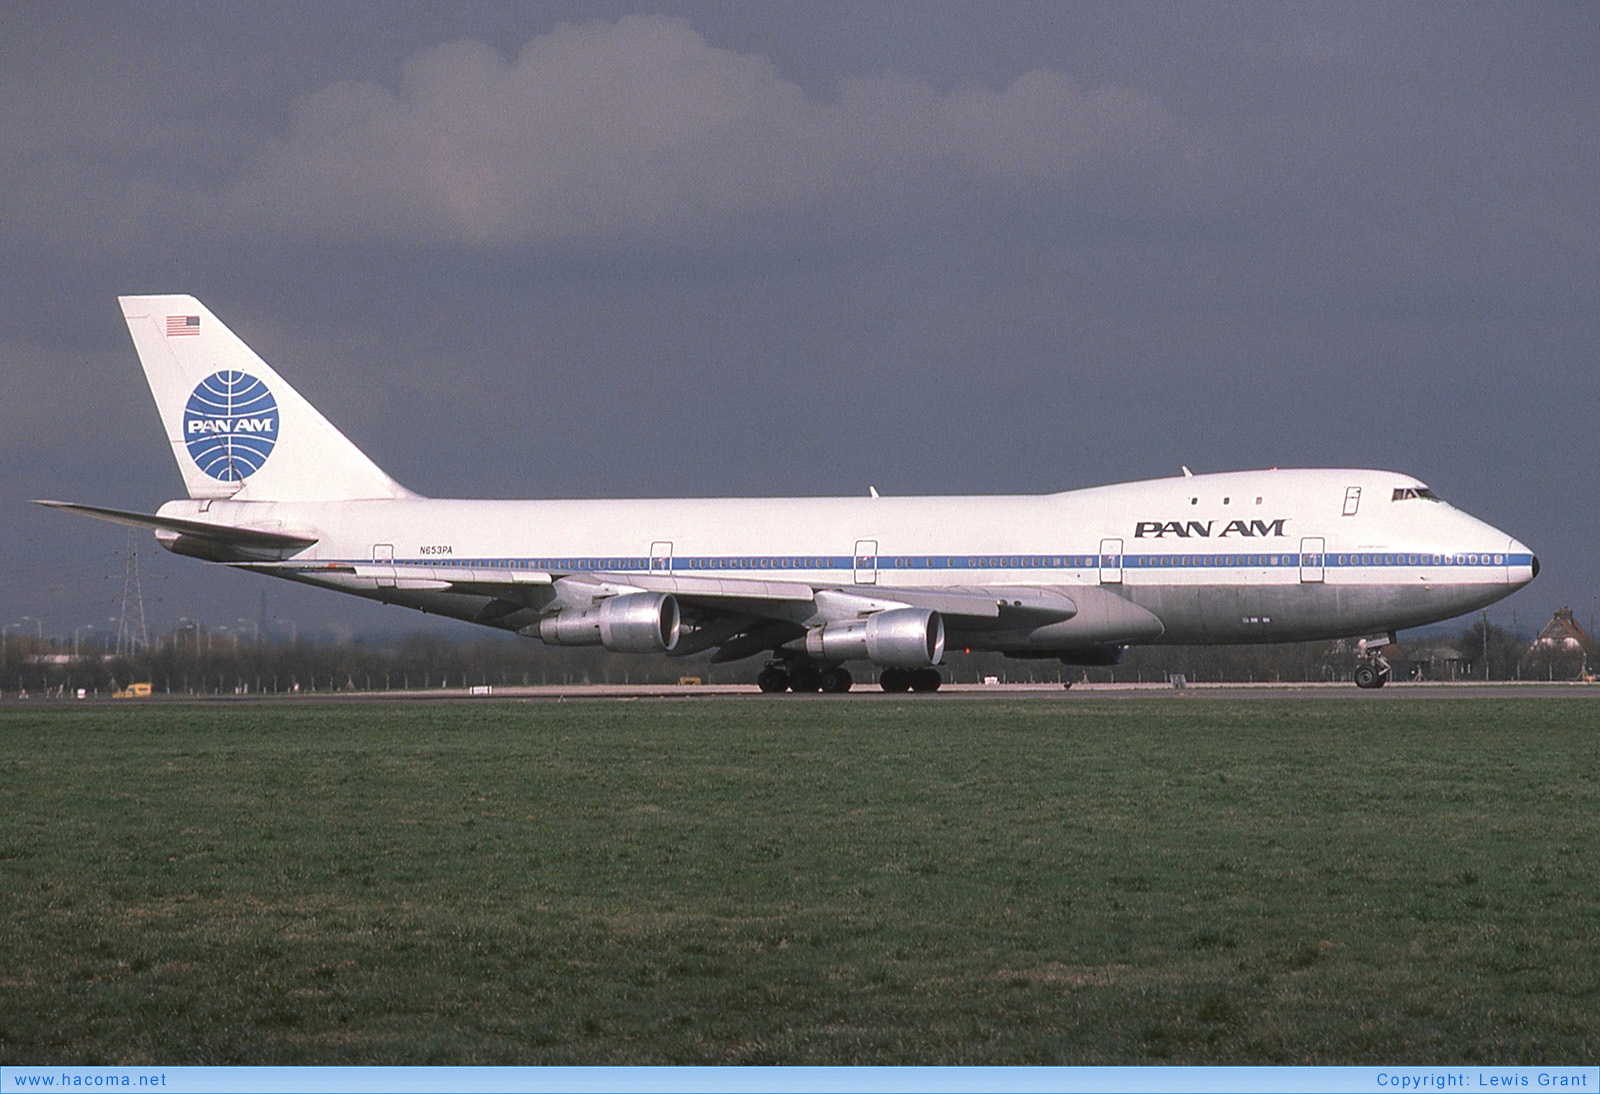 Foto von N653PA - Pan Am Clipper Unity / Pride of the Ocean - London Heathrow Airport - 27.02.1977